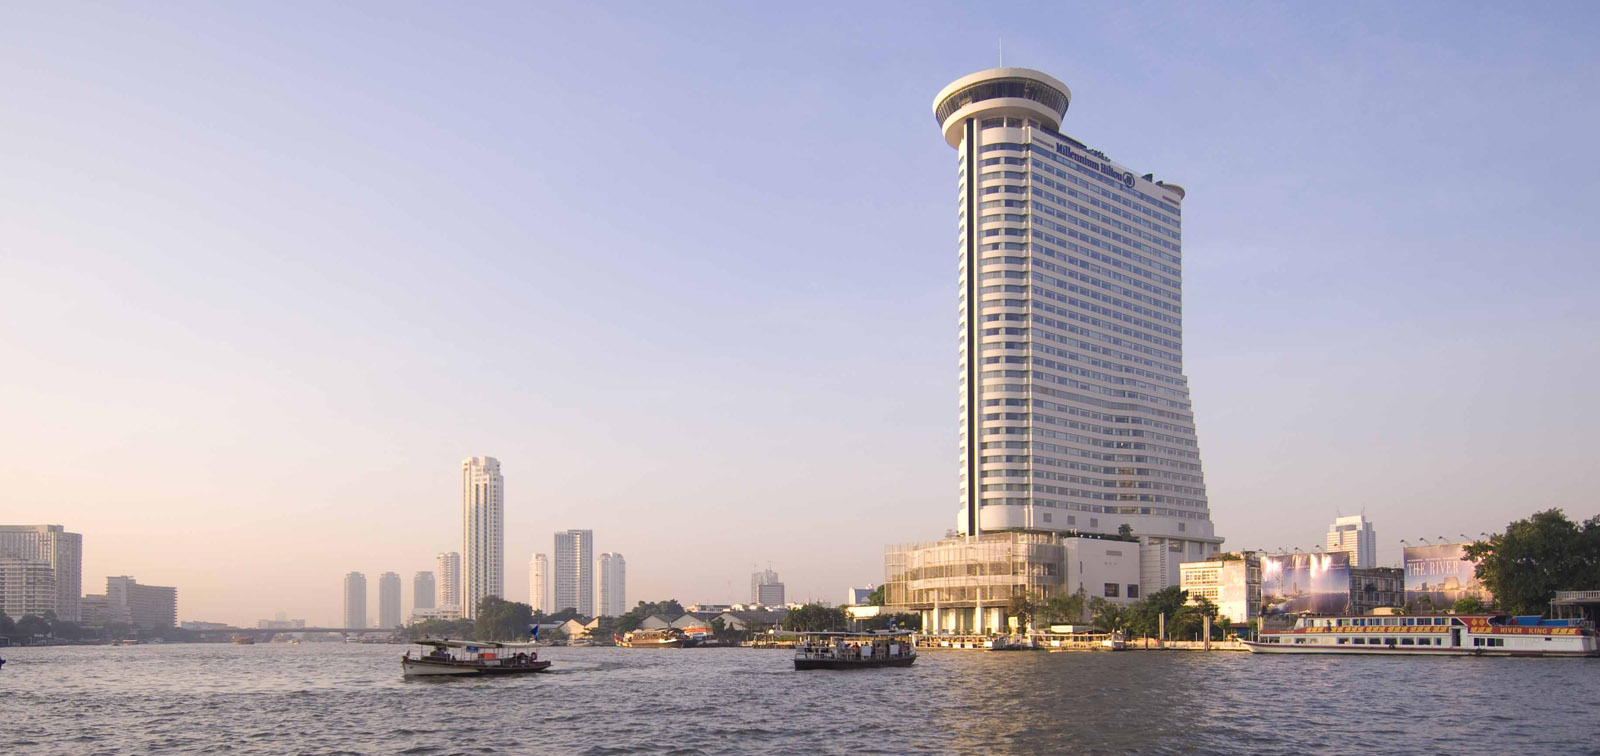 Hilton Millennium Bangkok, Thailand